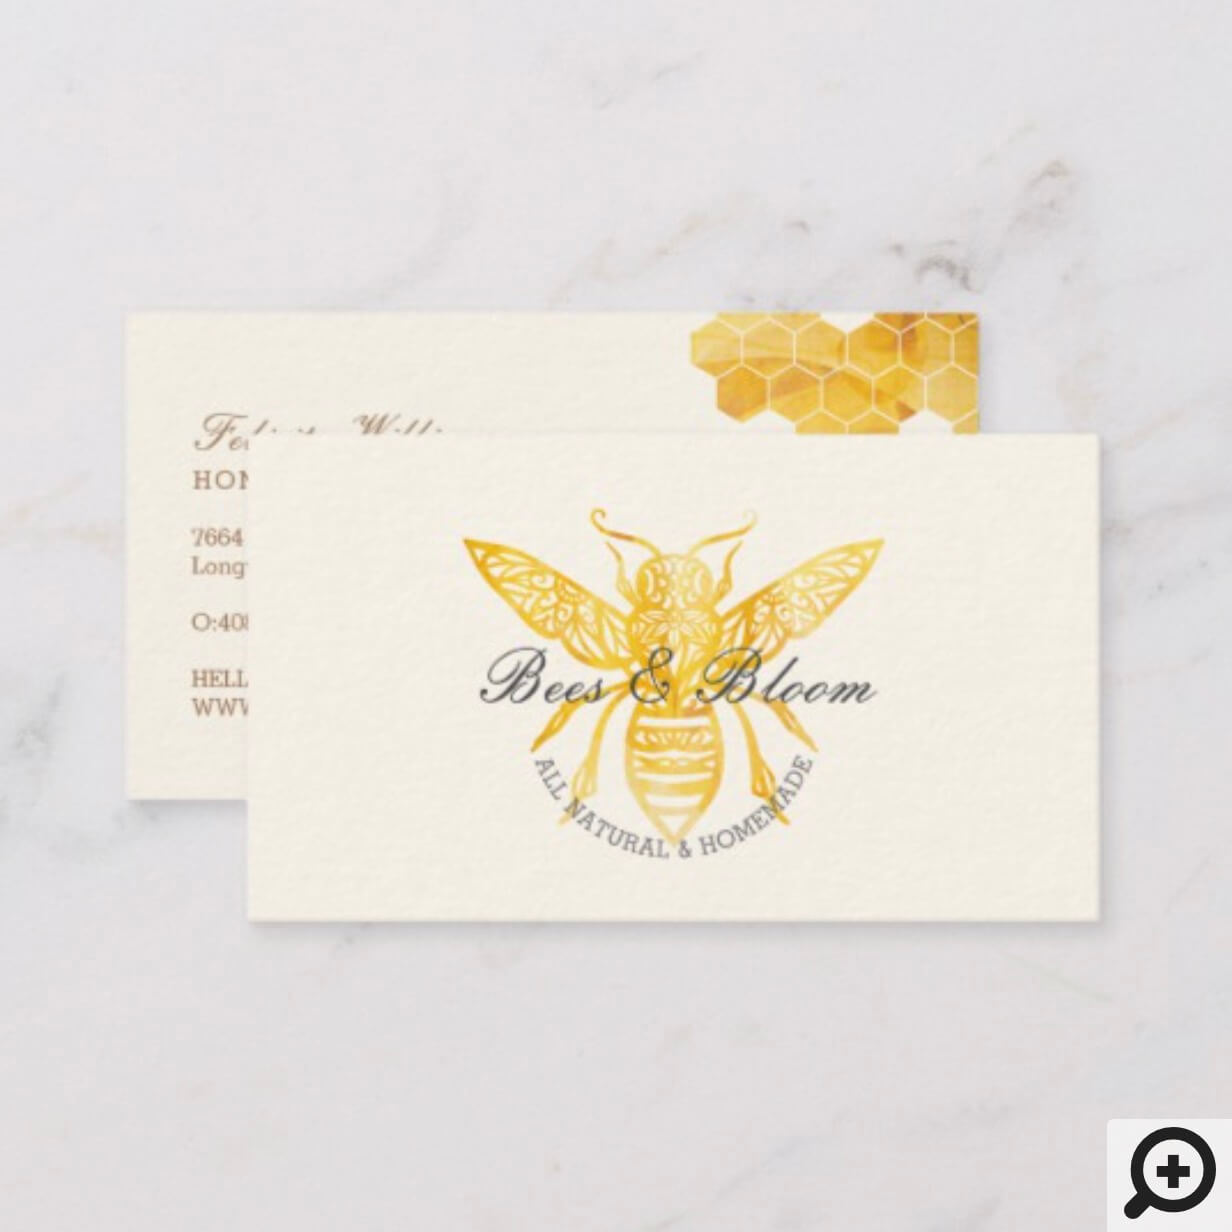 Handmade Honey Bee Decor, Bee Flower Decor, Bee Wall Art, Honeycomb,  Honeycomb Wall Decor, Bee Art, Wildflowers | B2 Creative Originals